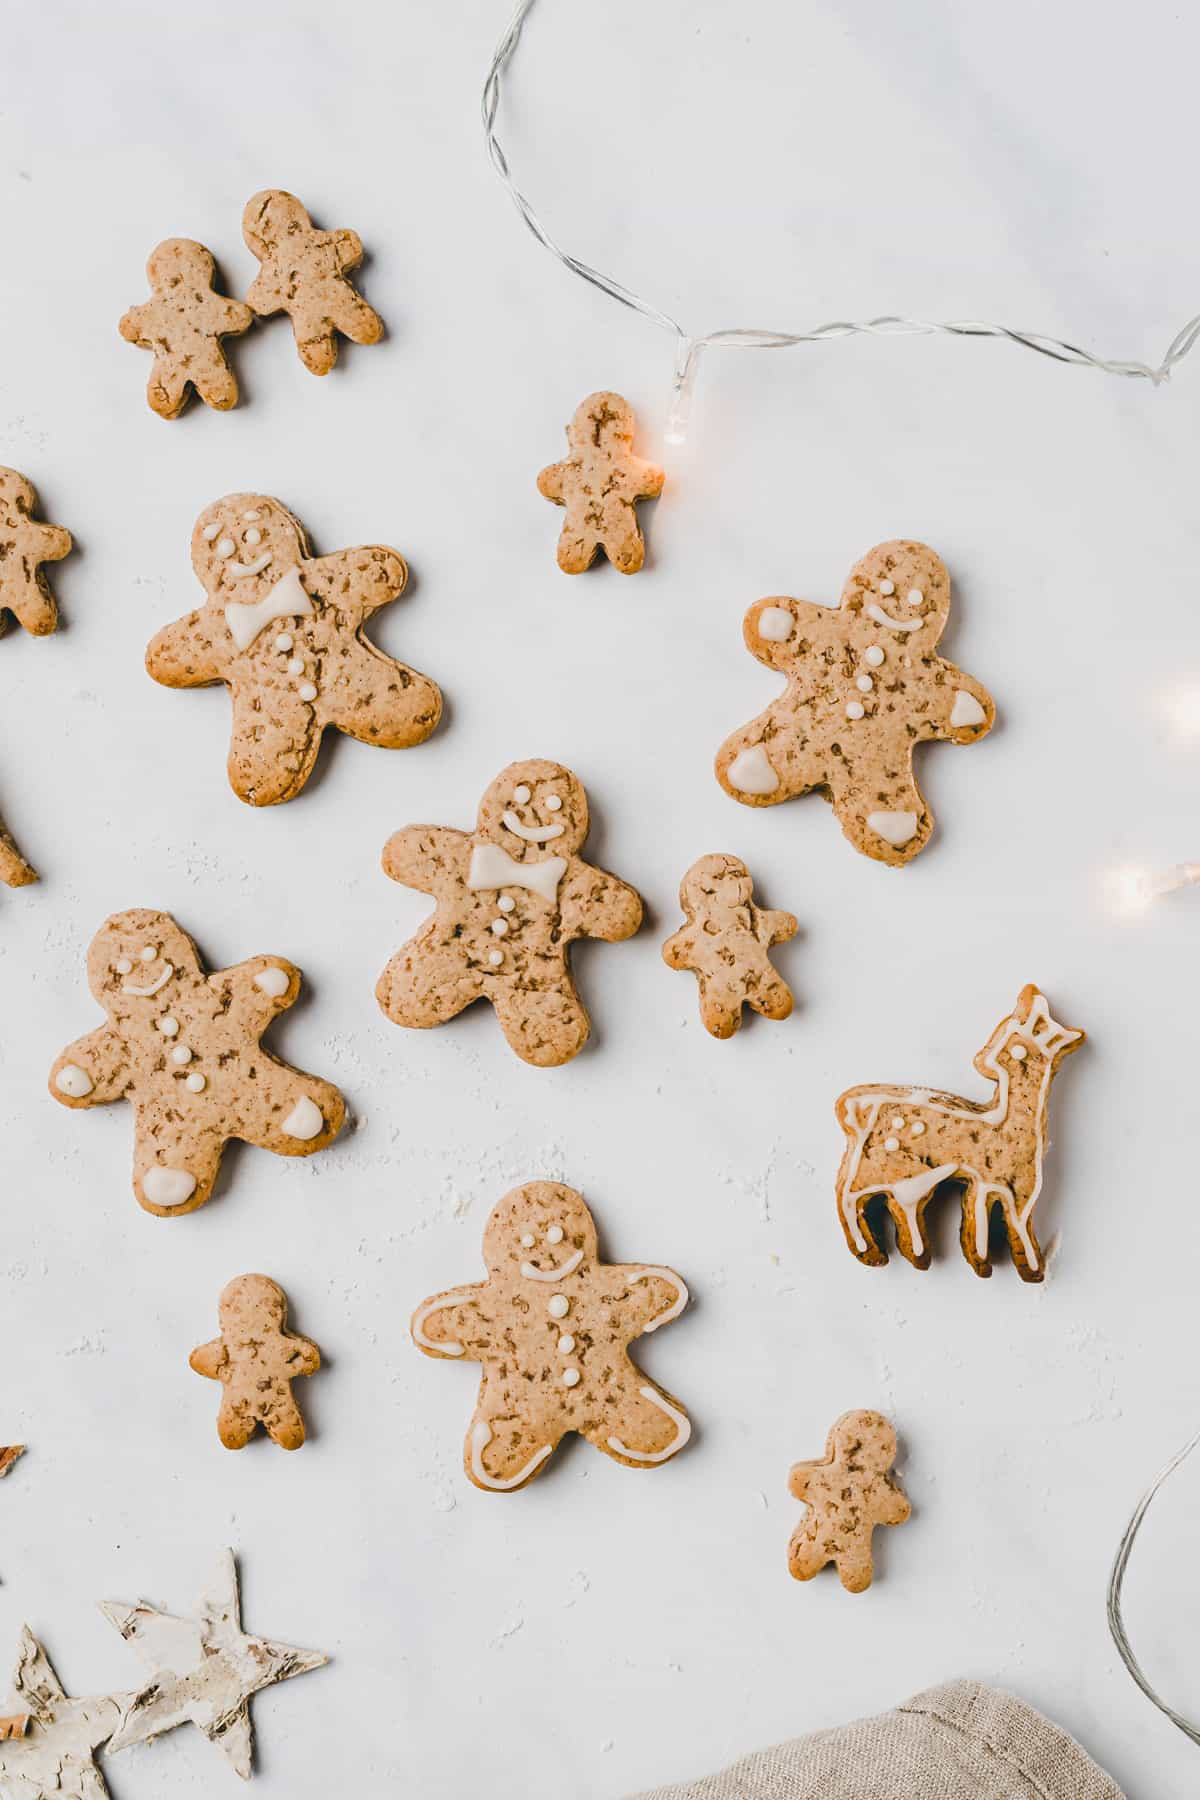 How to make vegan gingerbread cookies